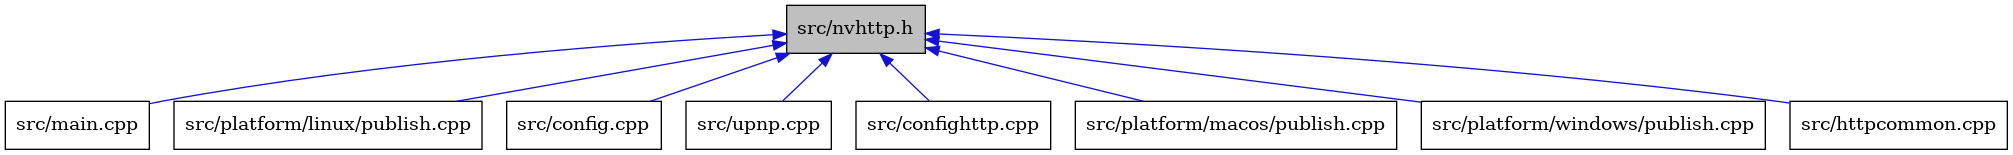 digraph {
    graph [bgcolor="#00000000"]
    node [shape=rectangle style=filled fillcolor="#FFFFFF" font=Helvetica padding=2]
    edge [color="#1414CE"]
    "5" [label="src/main.cpp" tooltip="src/main.cpp"]
    "6" [label="src/platform/linux/publish.cpp" tooltip="src/platform/linux/publish.cpp"]
    "2" [label="src/config.cpp" tooltip="src/config.cpp"]
    "9" [label="src/upnp.cpp" tooltip="src/upnp.cpp"]
    "1" [label="src/nvhttp.h" tooltip="src/nvhttp.h" fillcolor="#BFBFBF"]
    "3" [label="src/confighttp.cpp" tooltip="src/confighttp.cpp"]
    "7" [label="src/platform/macos/publish.cpp" tooltip="src/platform/macos/publish.cpp"]
    "8" [label="src/platform/windows/publish.cpp" tooltip="src/platform/windows/publish.cpp"]
    "4" [label="src/httpcommon.cpp" tooltip="src/httpcommon.cpp"]
    "1" -> "2" [dir=back tooltip="include"]
    "1" -> "3" [dir=back tooltip="include"]
    "1" -> "4" [dir=back tooltip="include"]
    "1" -> "5" [dir=back tooltip="include"]
    "1" -> "6" [dir=back tooltip="include"]
    "1" -> "7" [dir=back tooltip="include"]
    "1" -> "8" [dir=back tooltip="include"]
    "1" -> "9" [dir=back tooltip="include"]
}